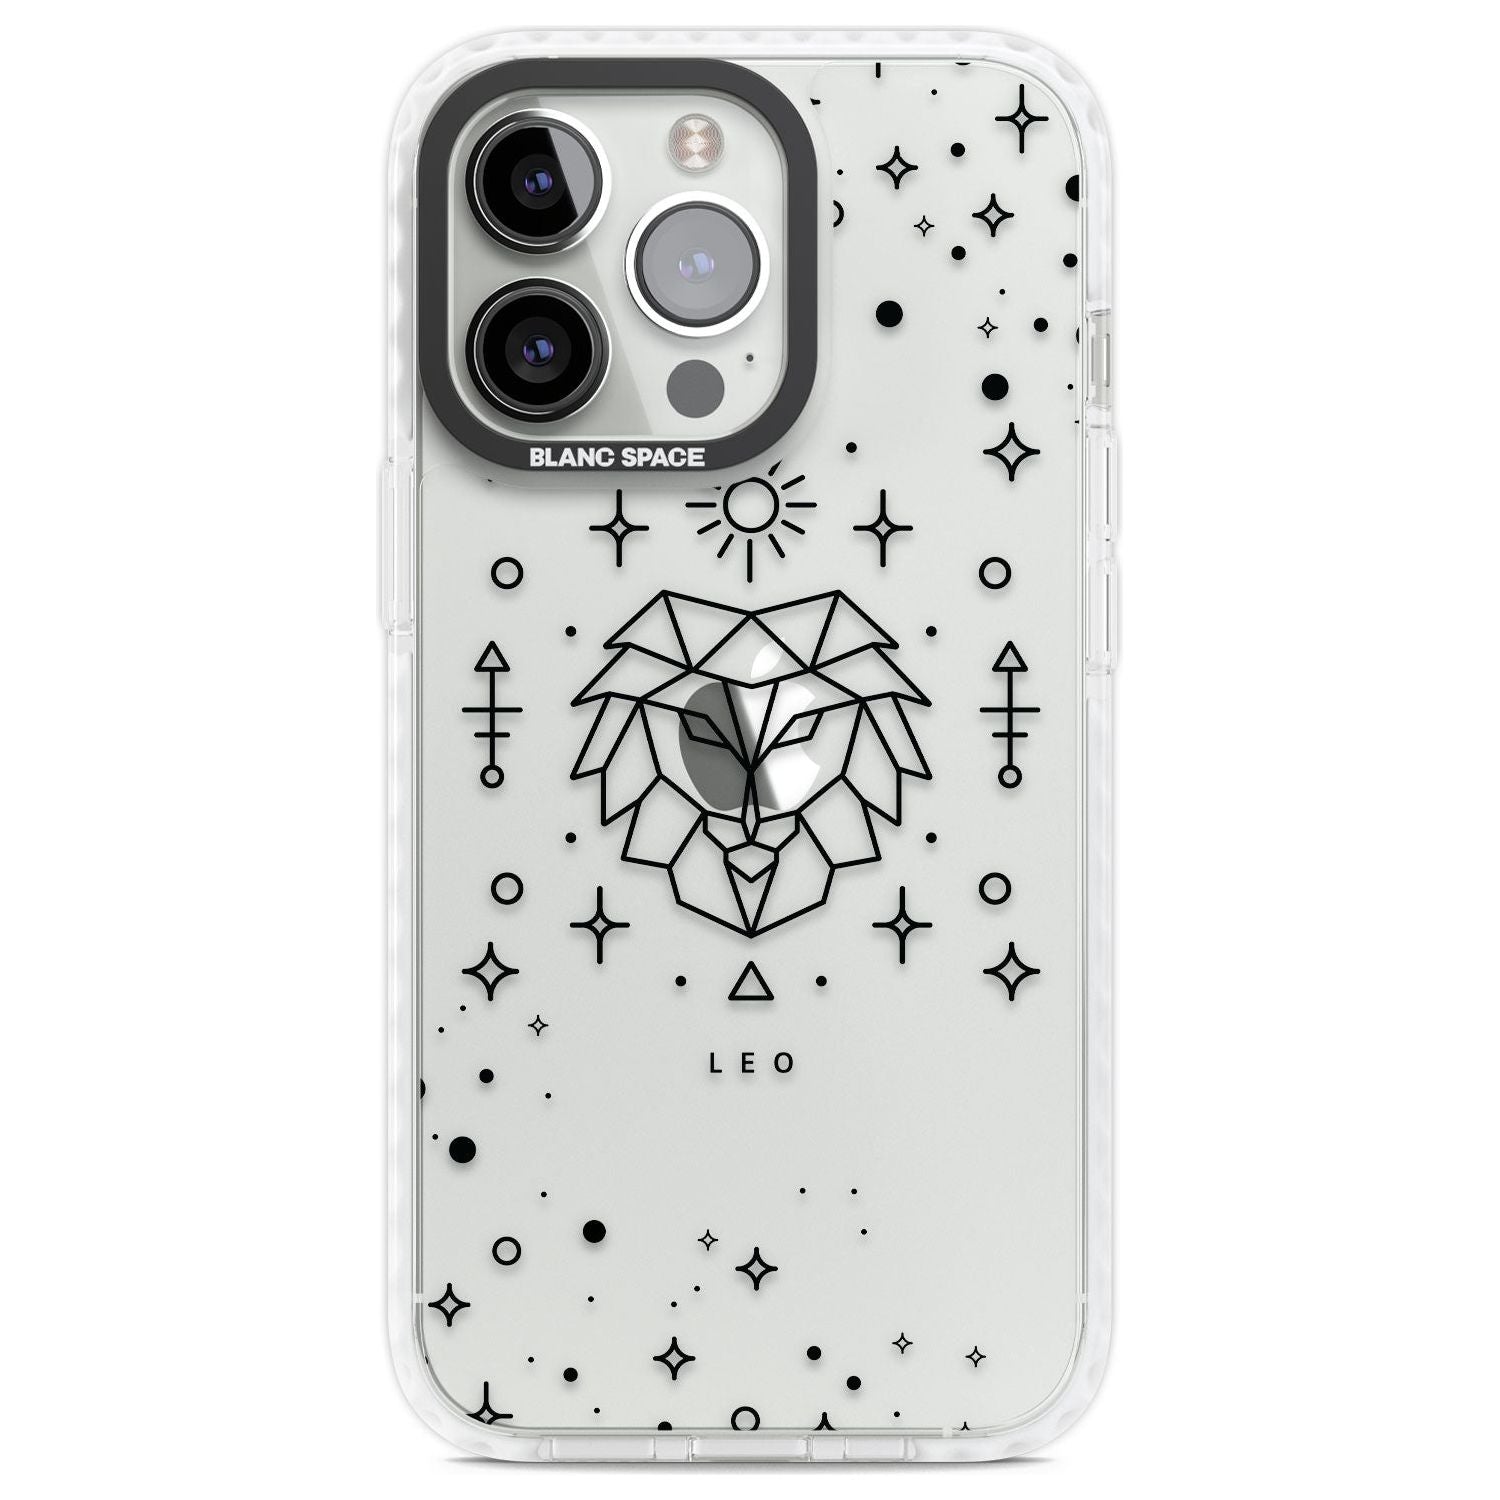 Leo Emblem - Transparent Design Phone Case iPhone 13 Pro / Impact Case,iPhone 14 Pro / Impact Case,iPhone 15 Pro Max / Impact Case,iPhone 15 Pro / Impact Case Blanc Space